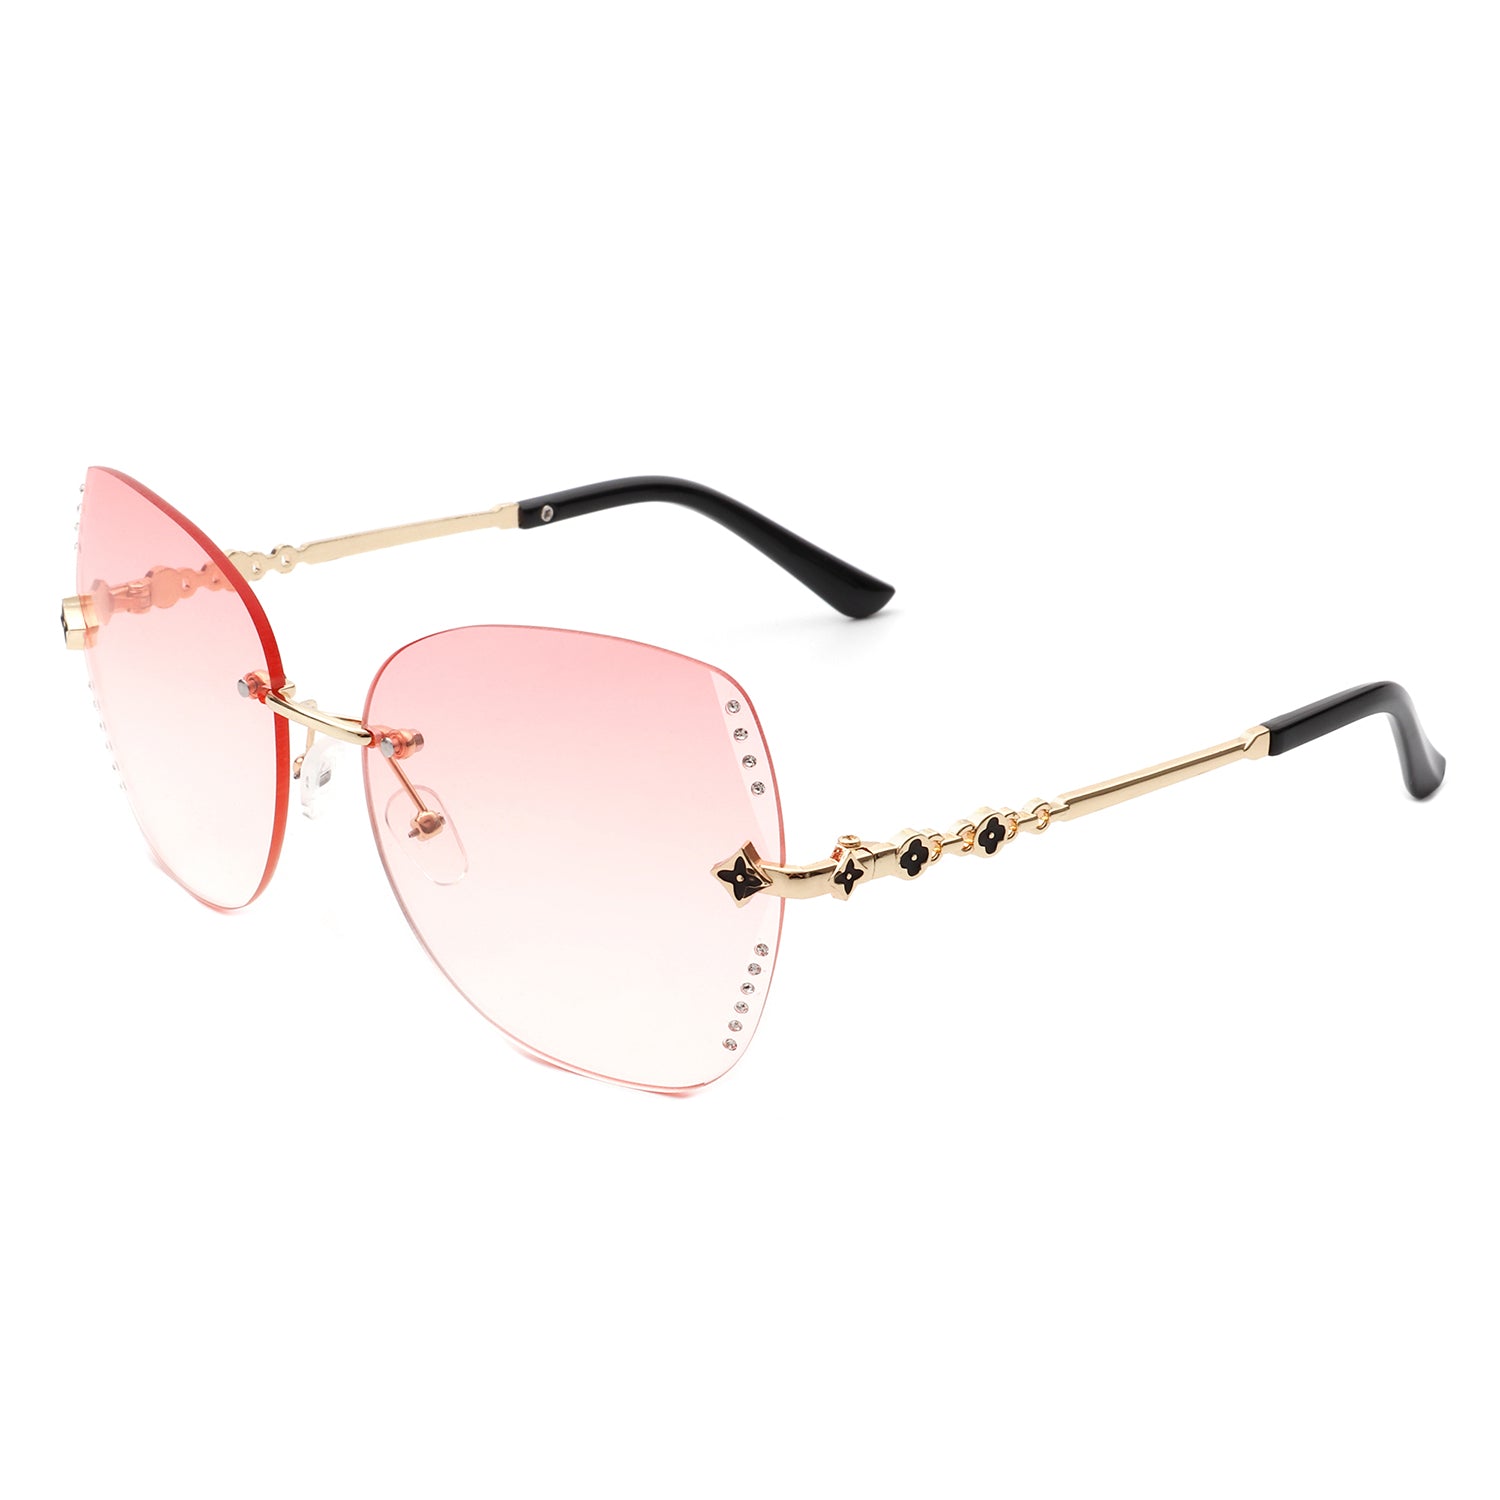 Kineticx - Oversize Rimless Butterfly Shape Tinted Rhinestone Fashion Sunglasses Pink